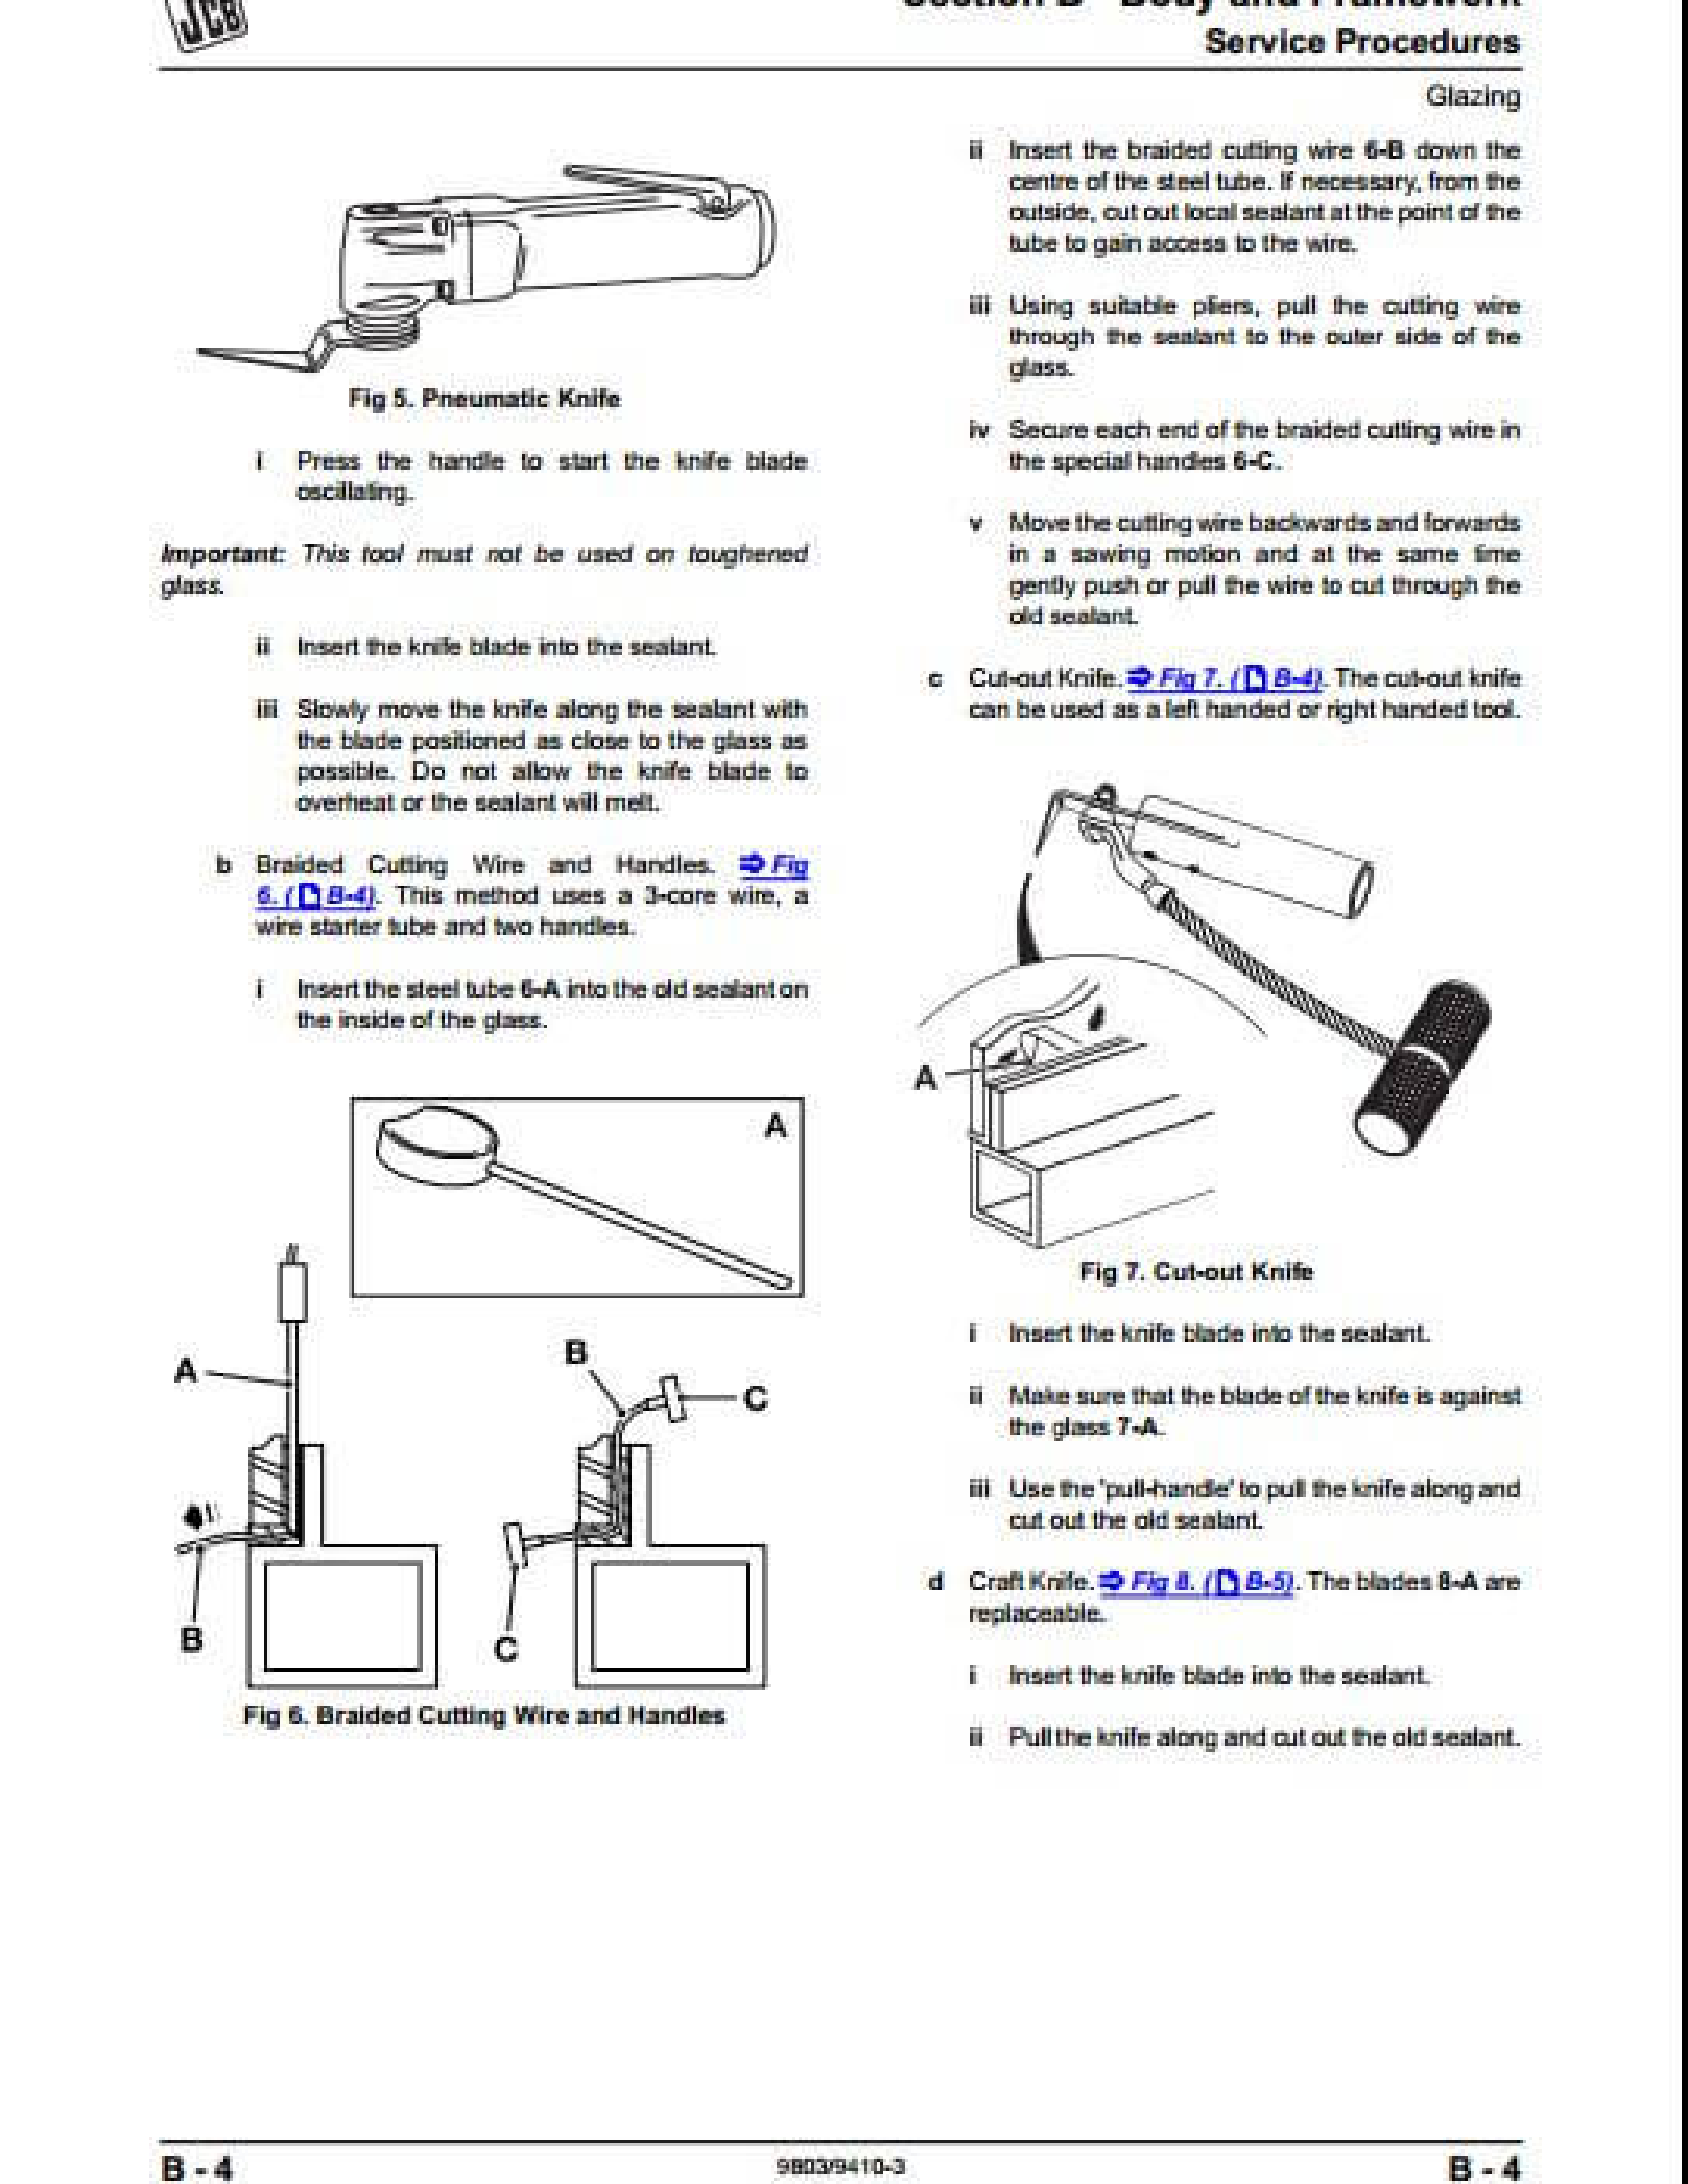 JCB 4X4 Groundhog Utility Vehicle manual